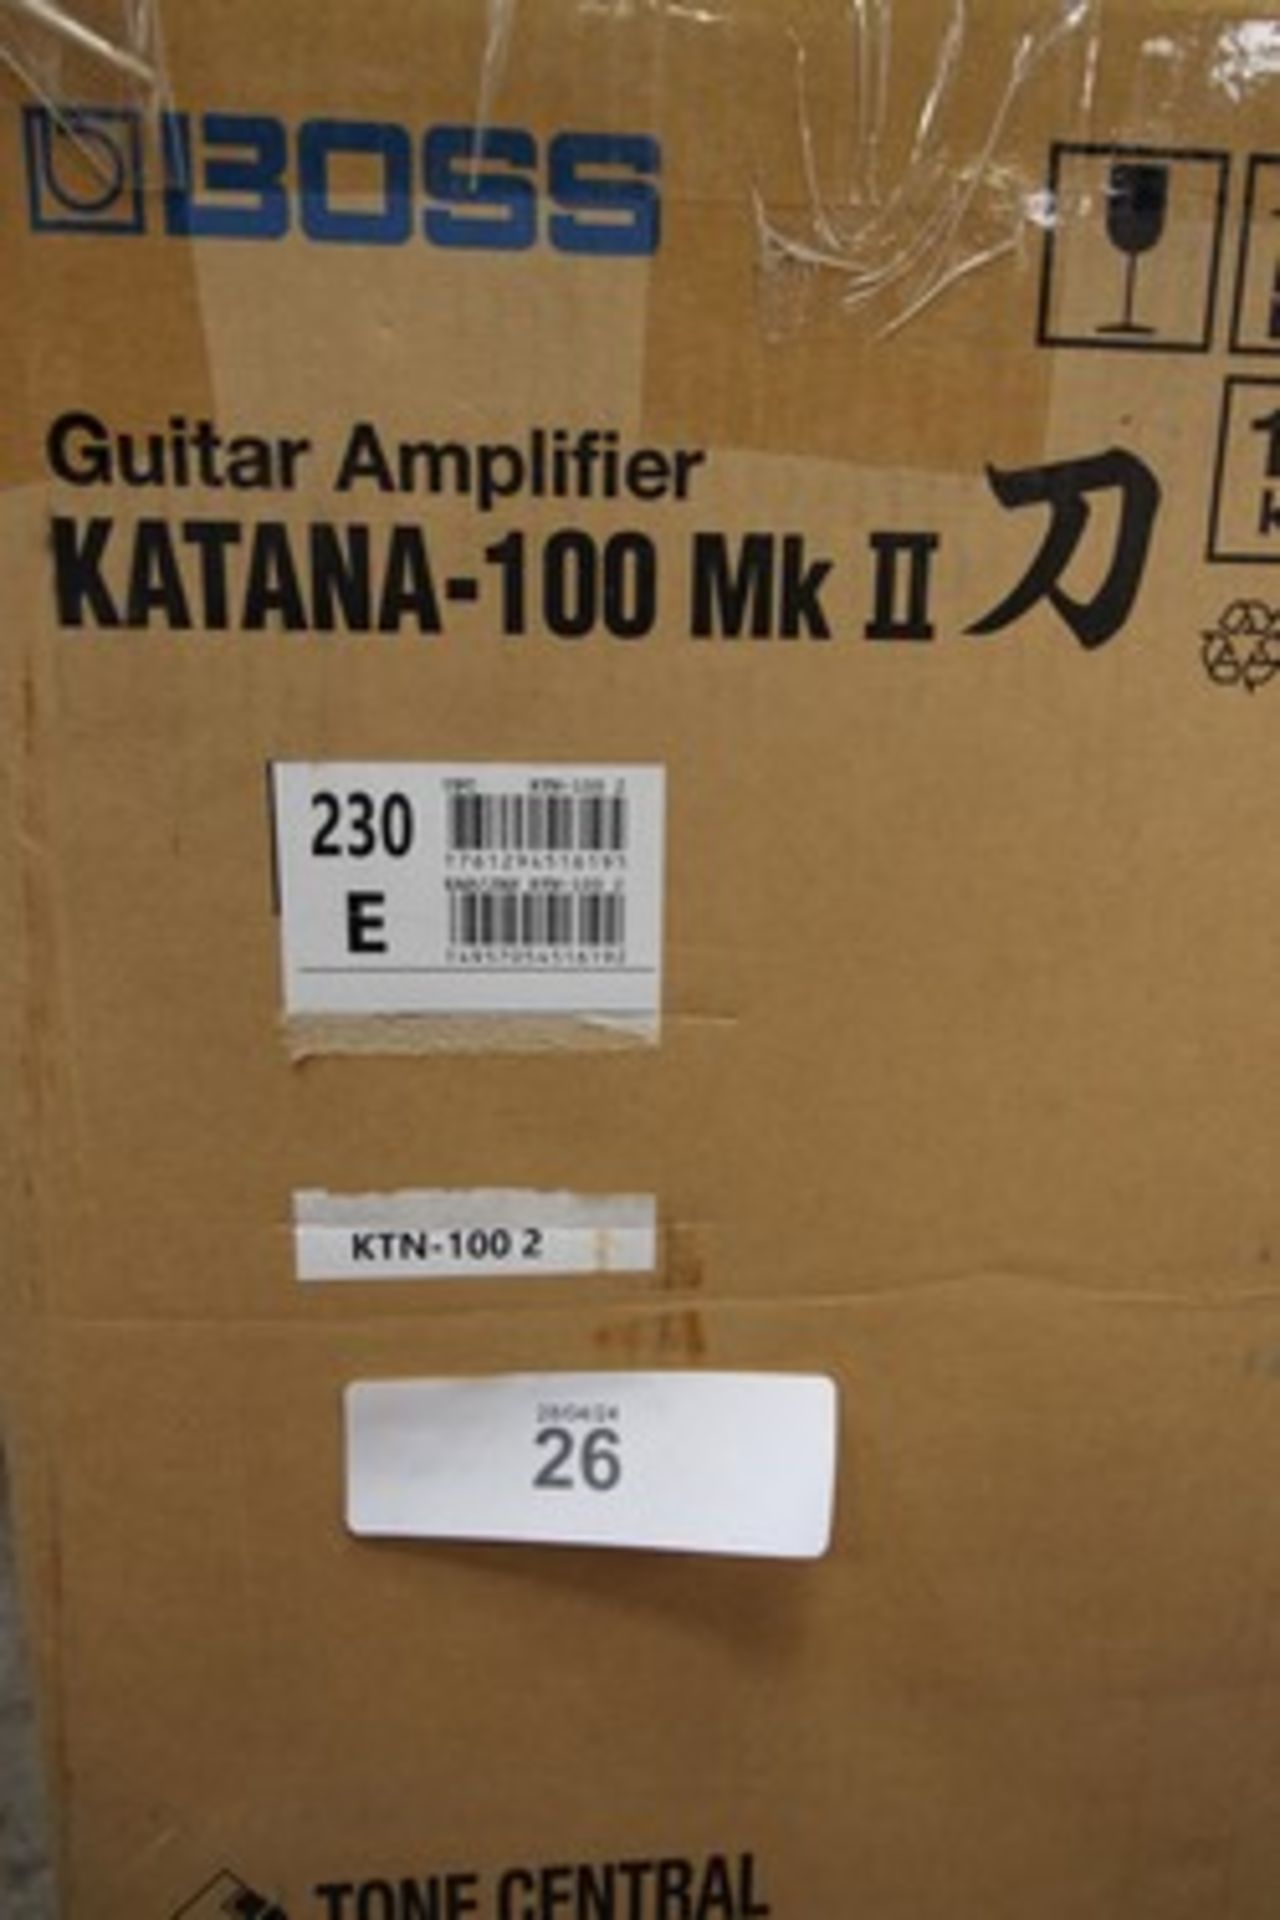 1 x Boss Katana-100 MK2 D guitar amplifier, model: KTN-1002 - sealed new in box (GS6) - Image 2 of 3